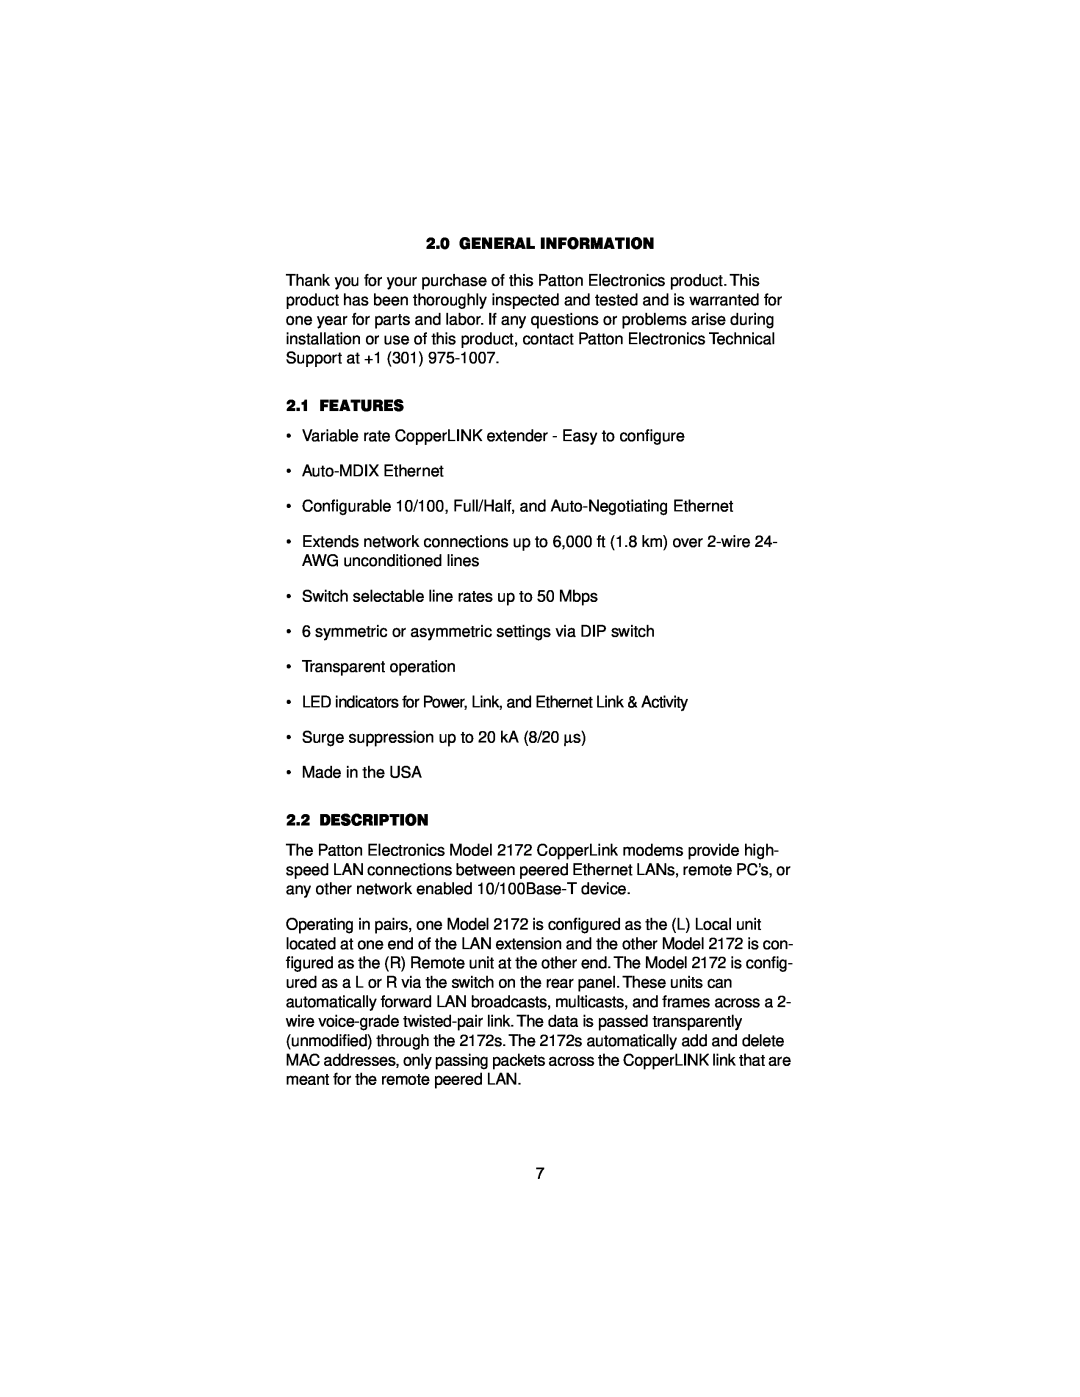 Patton electronic 2172 user manual General Information, Features, Description 